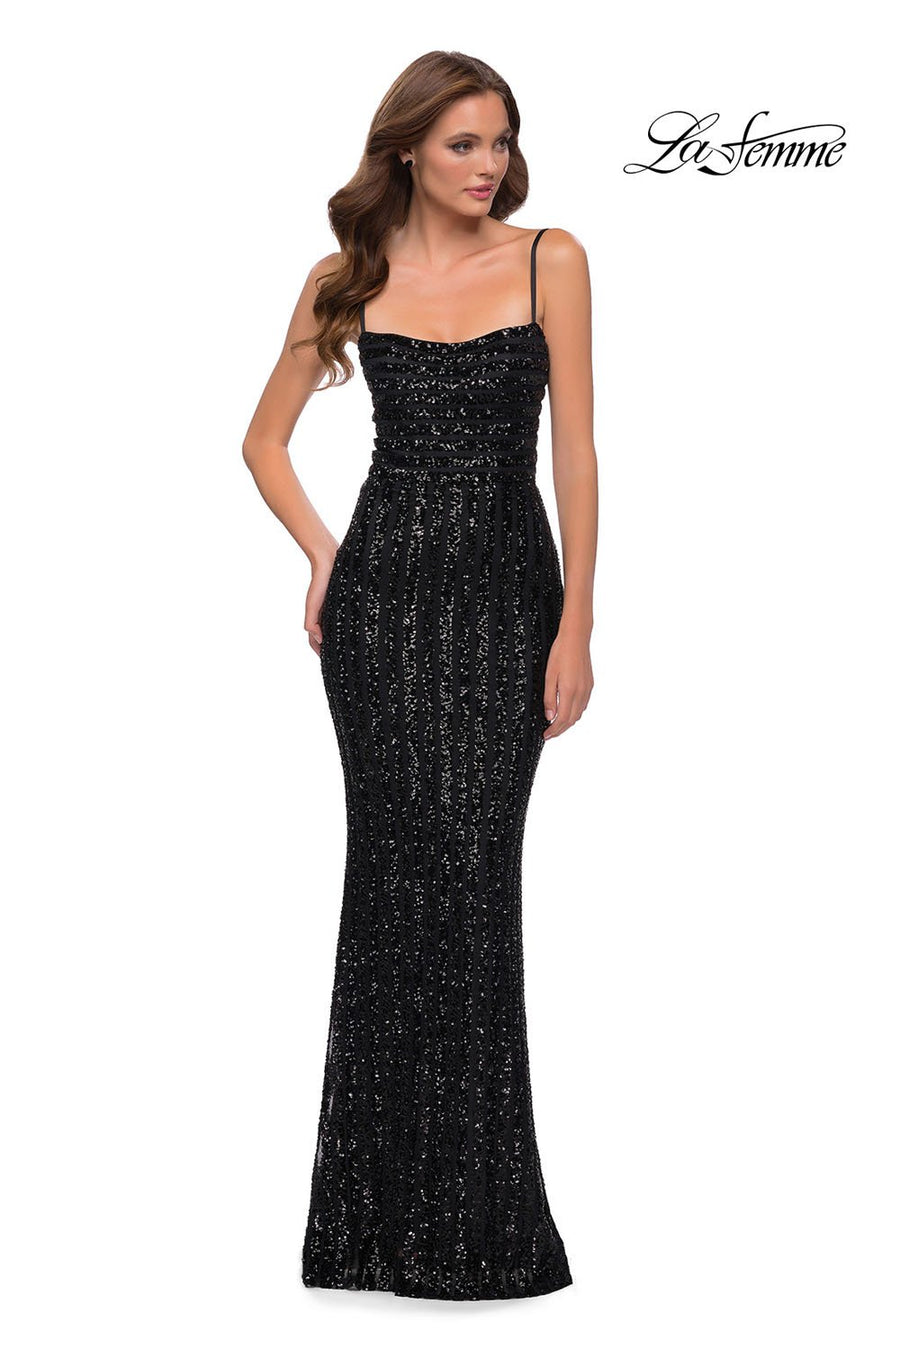 La Femme 29713 prom dress images.  La Femme 29713 is available in these colors: Black.